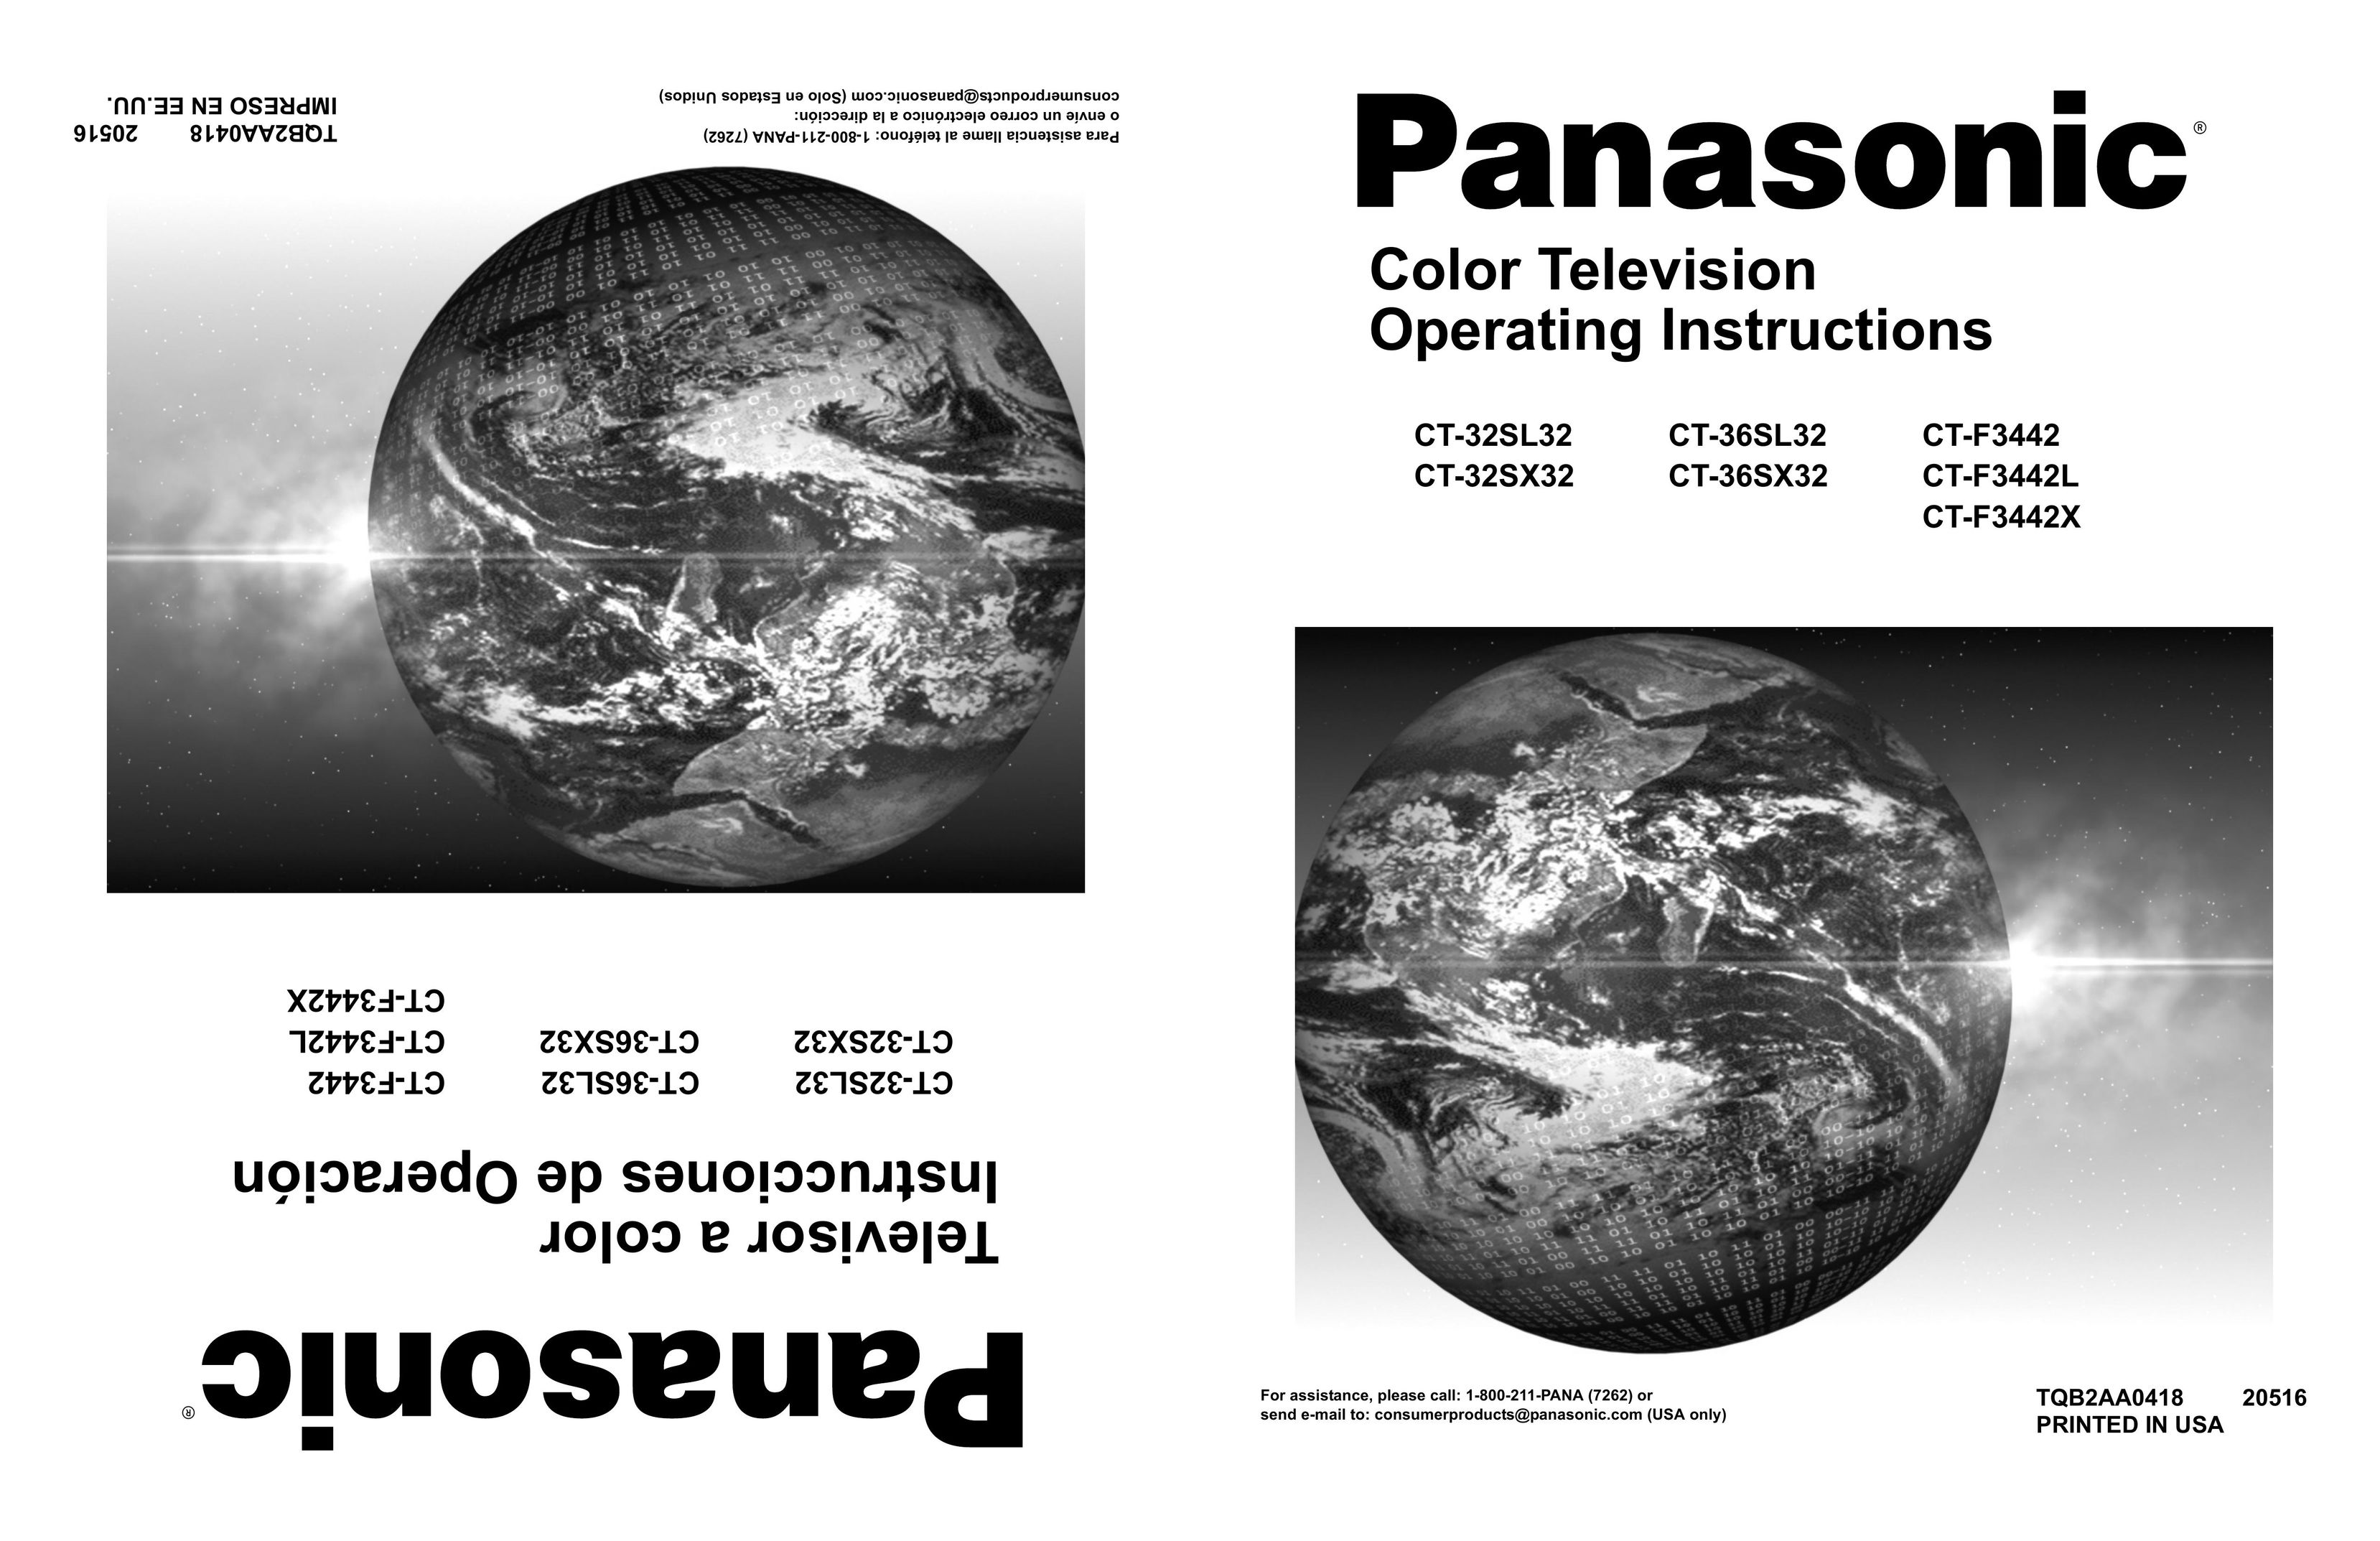 Panasonic CT-F3442L Flat Panel Television User Manual